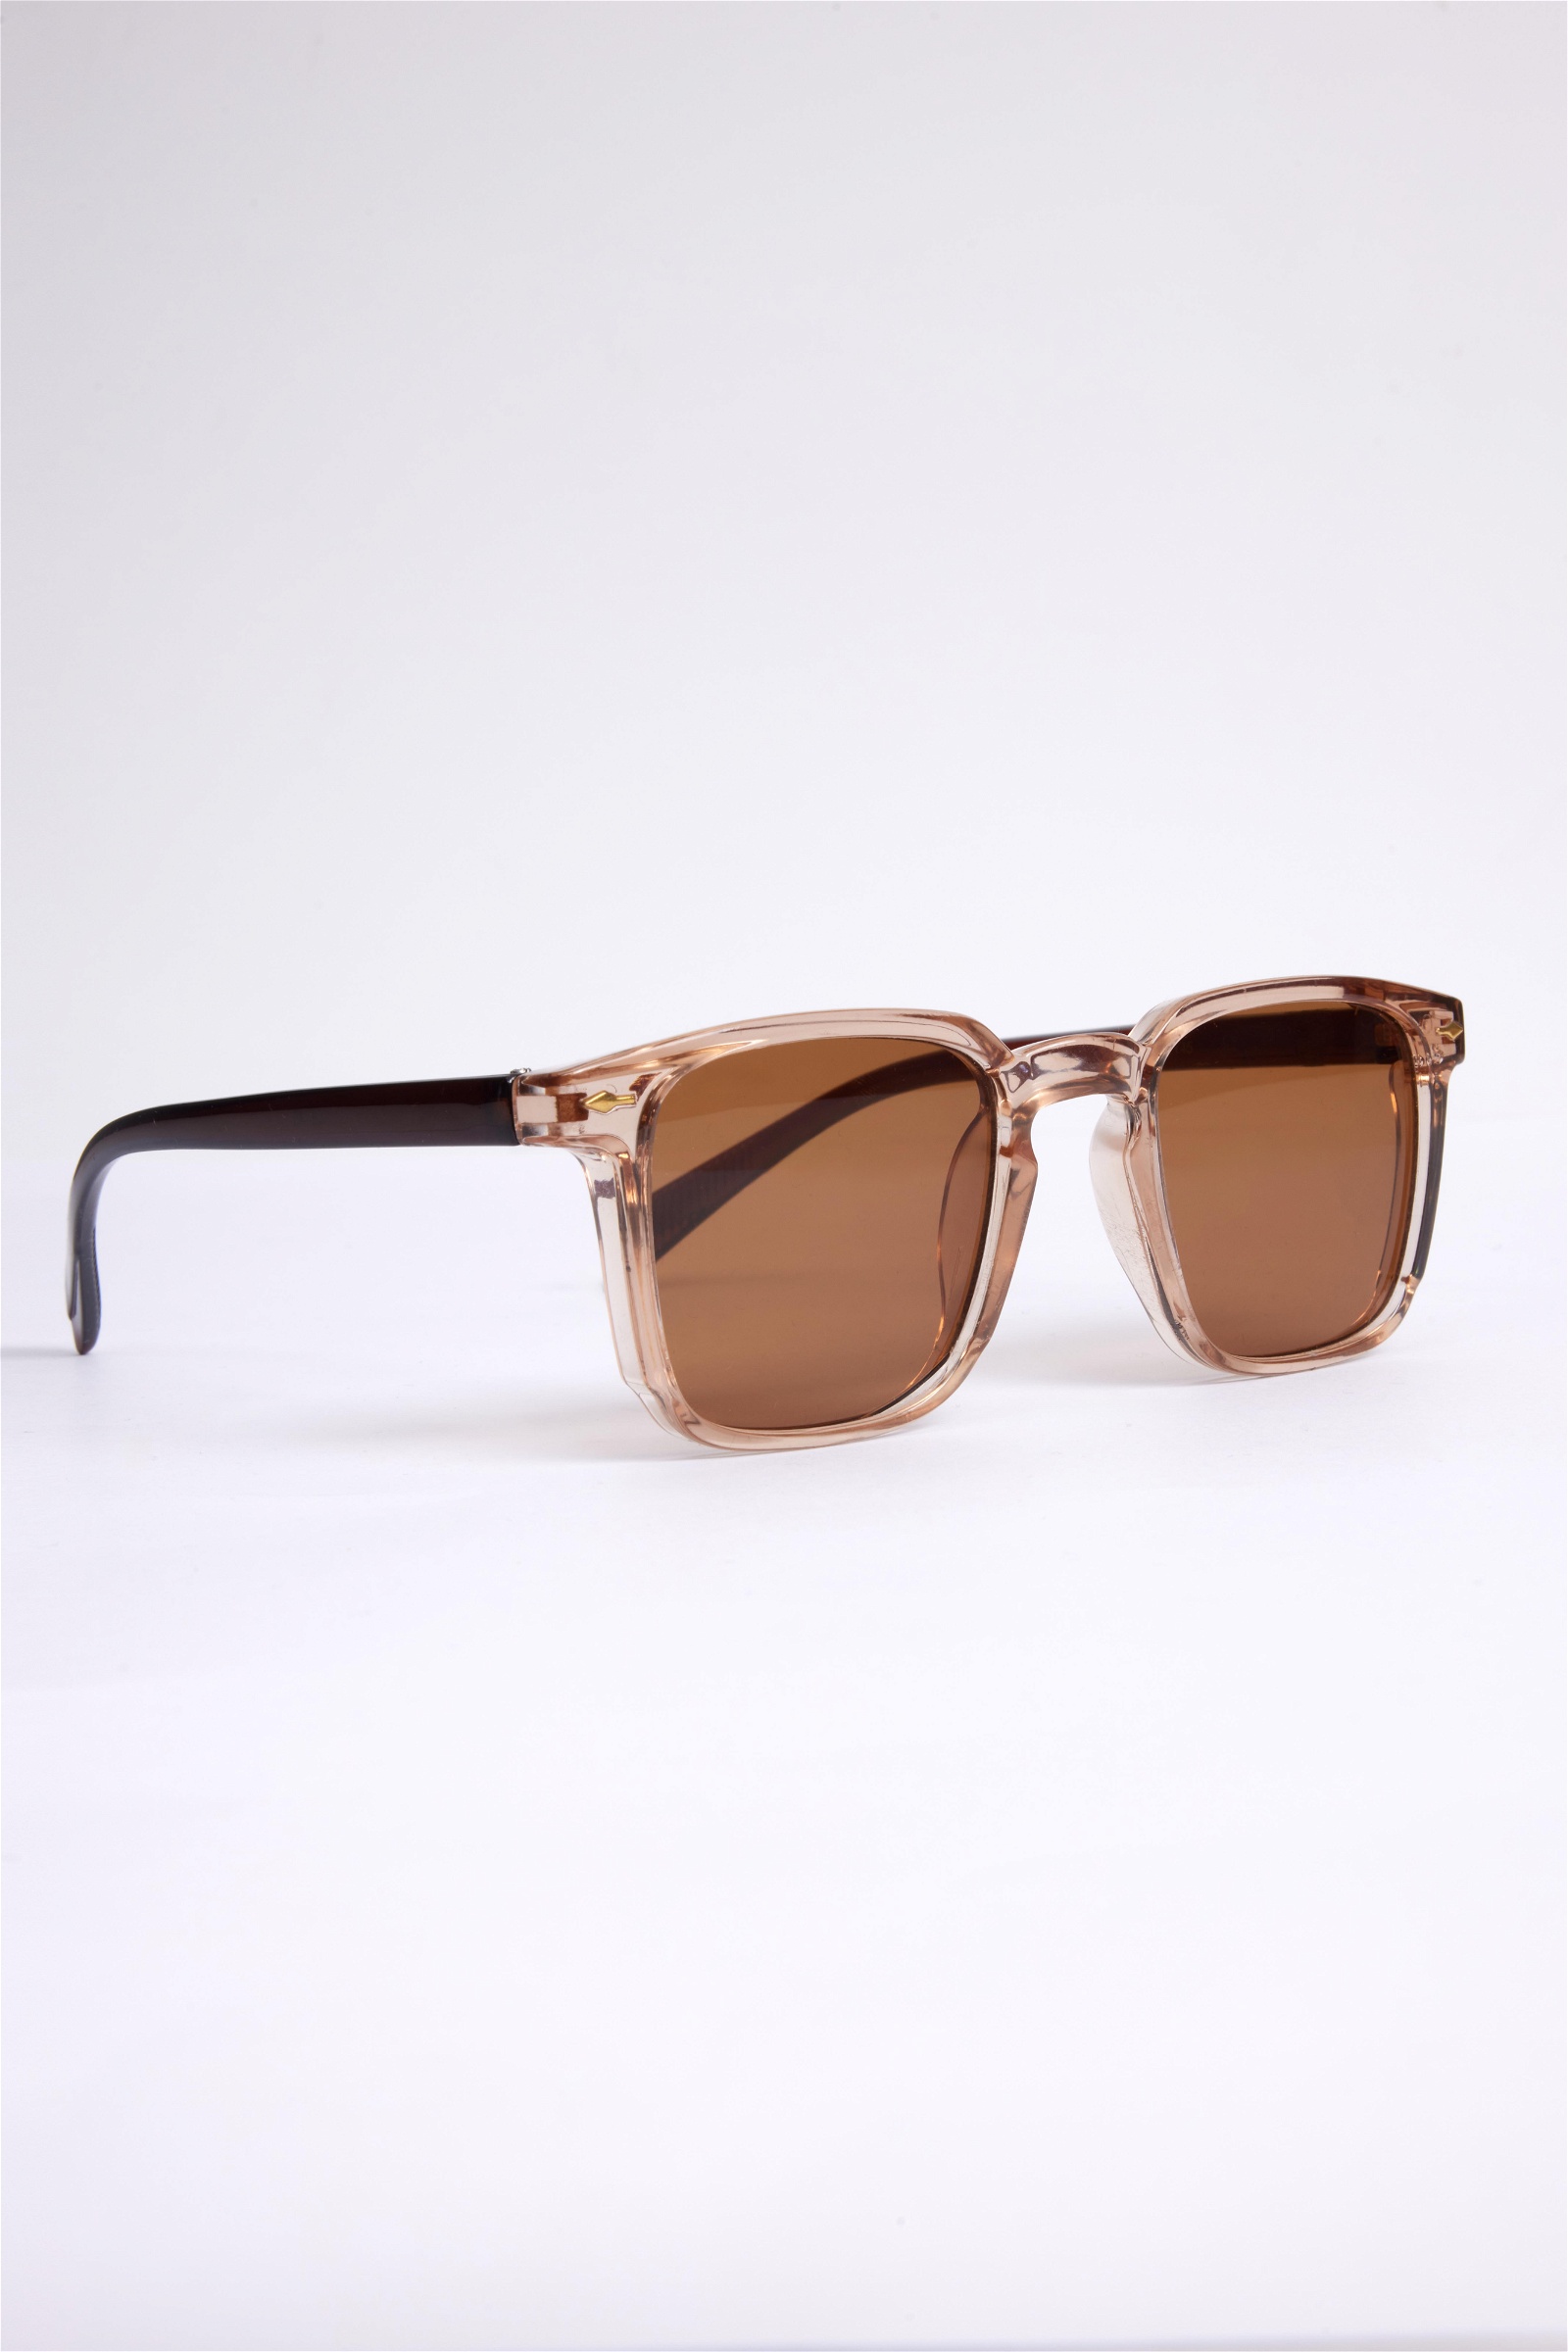 Plain Brown Sunglasses